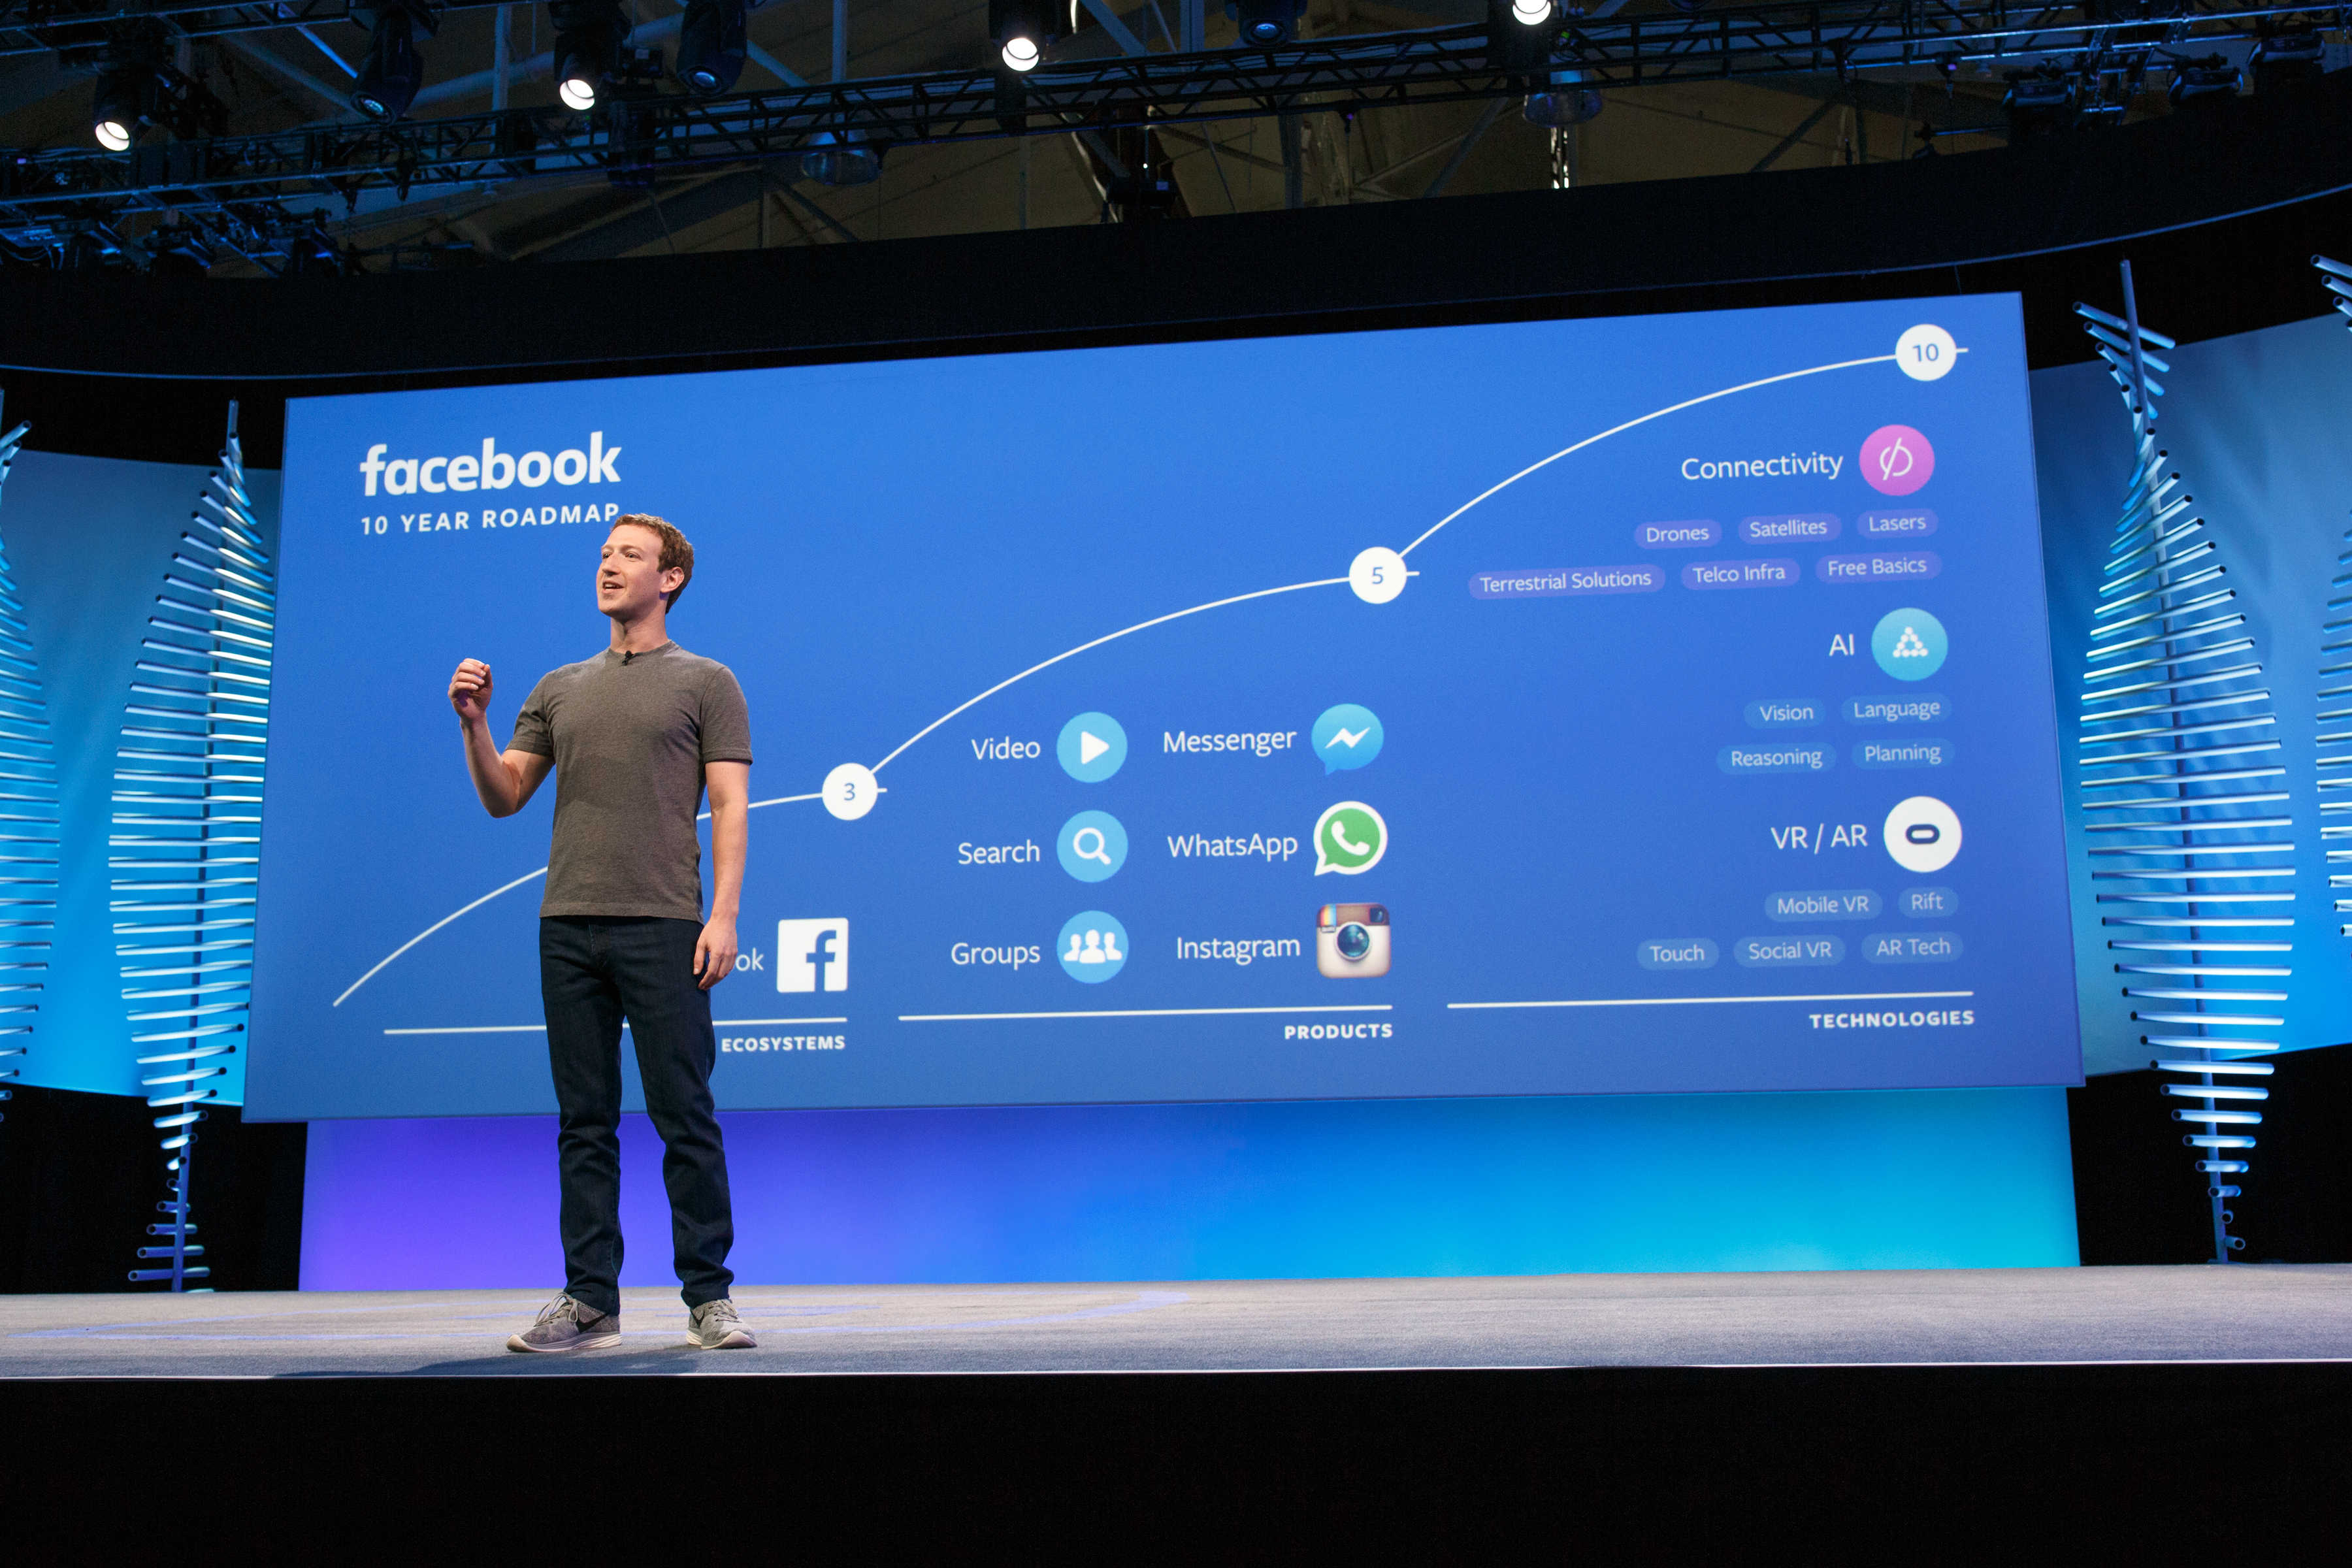 Facebook messaging apps